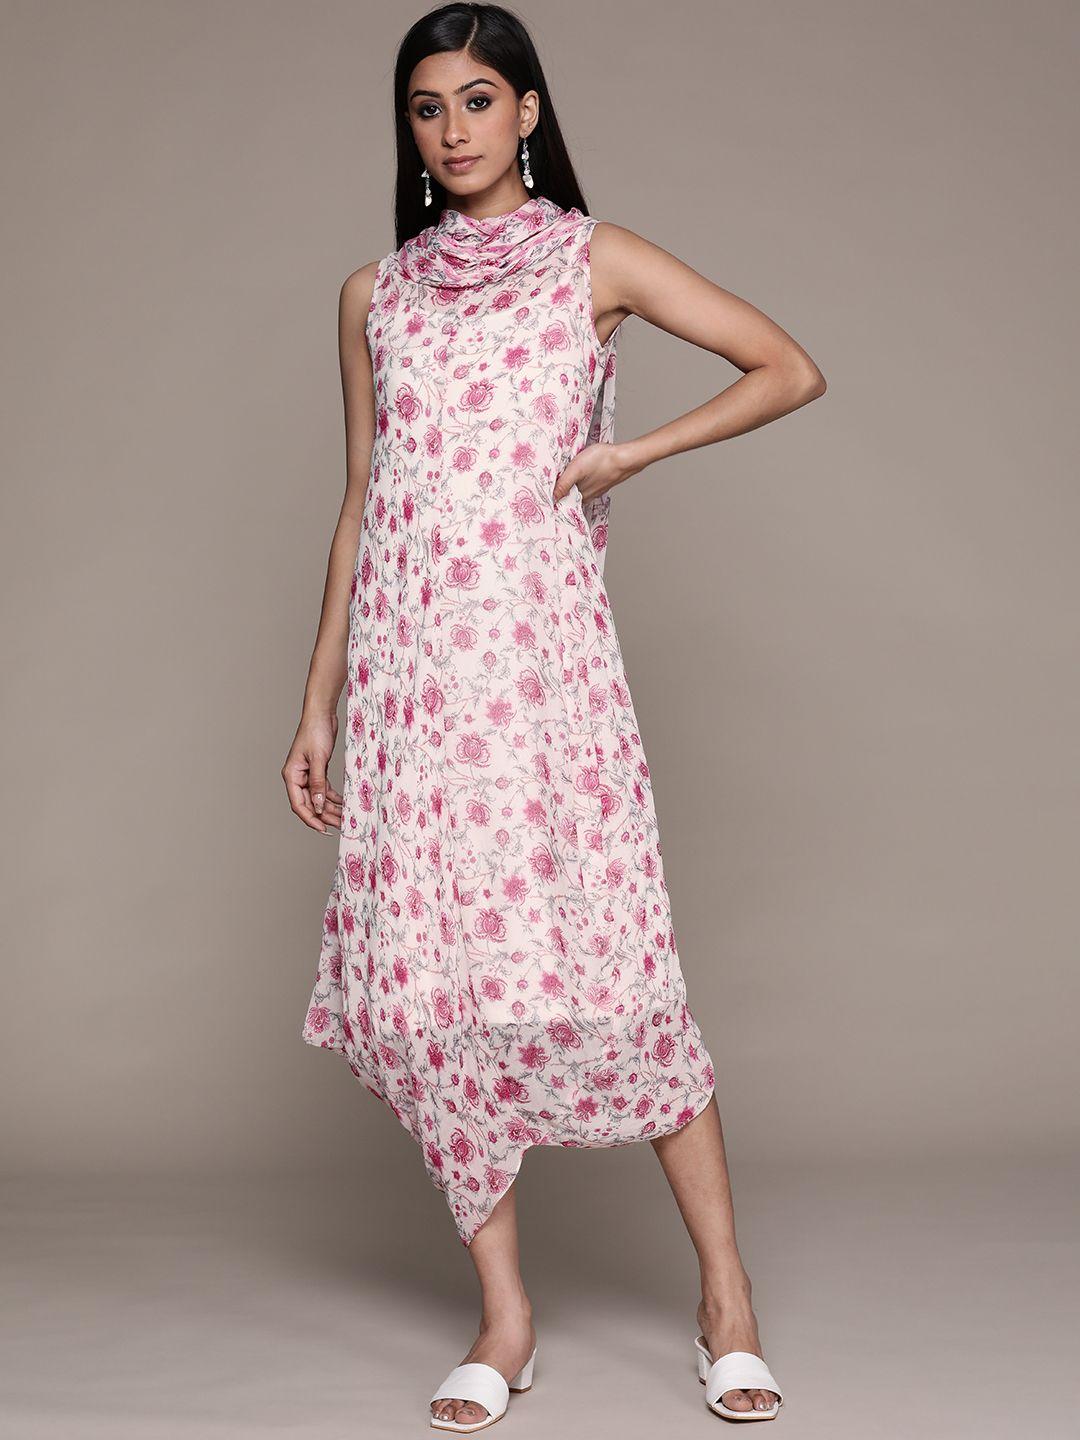 aarke ritu kumar white & pink floral cowl neck georgette a-line midi dress